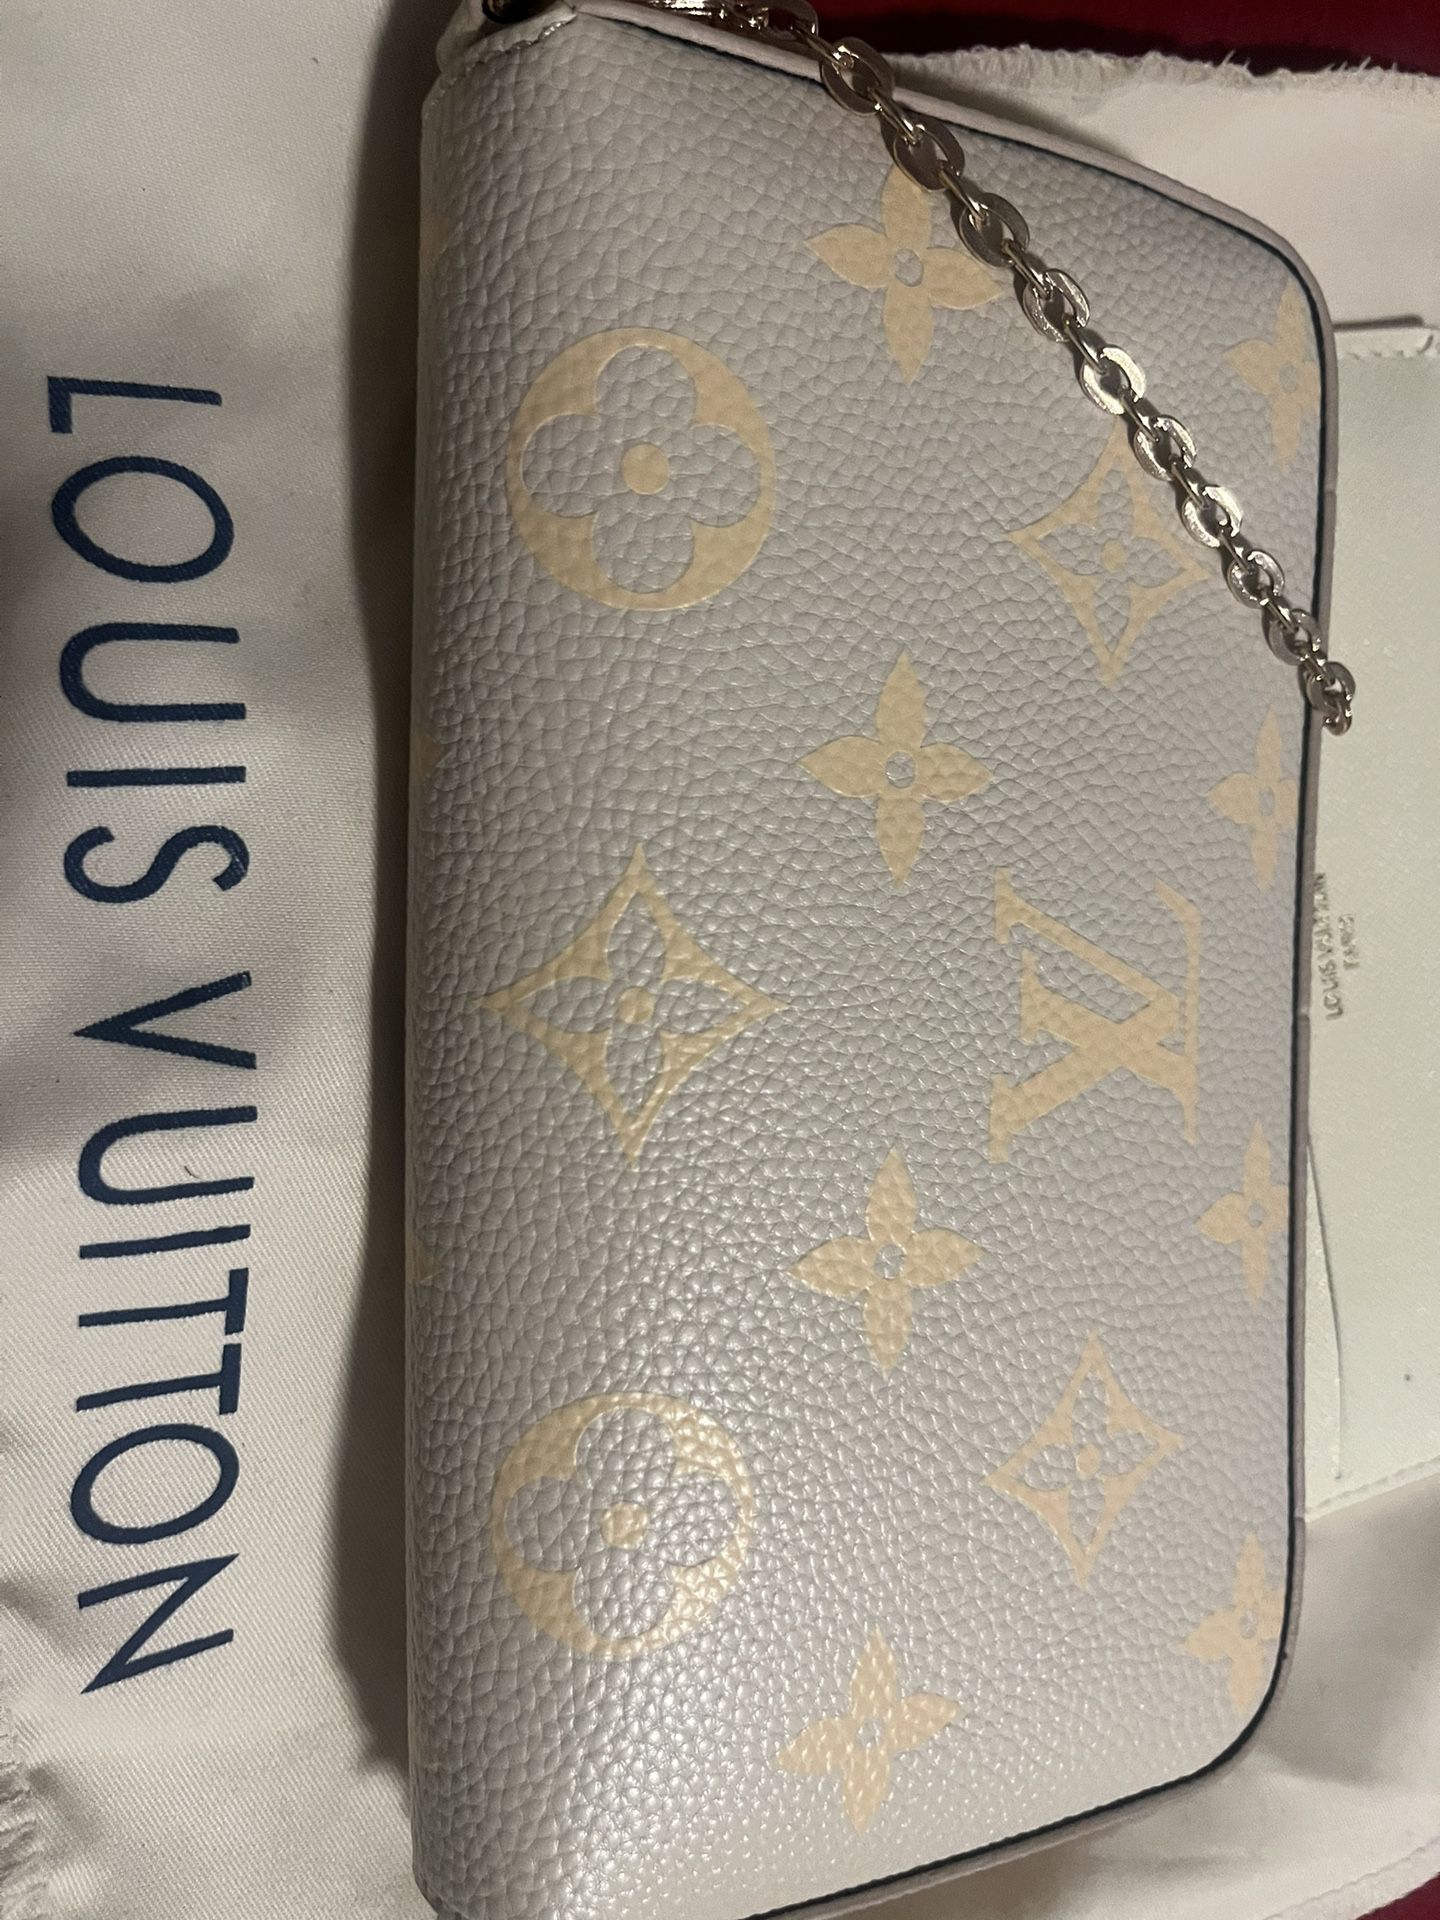 Louis Vuitton LV NBA Monogram Pocket Organizer Wallet for Sale in Boca  Raton, FL - OfferUp